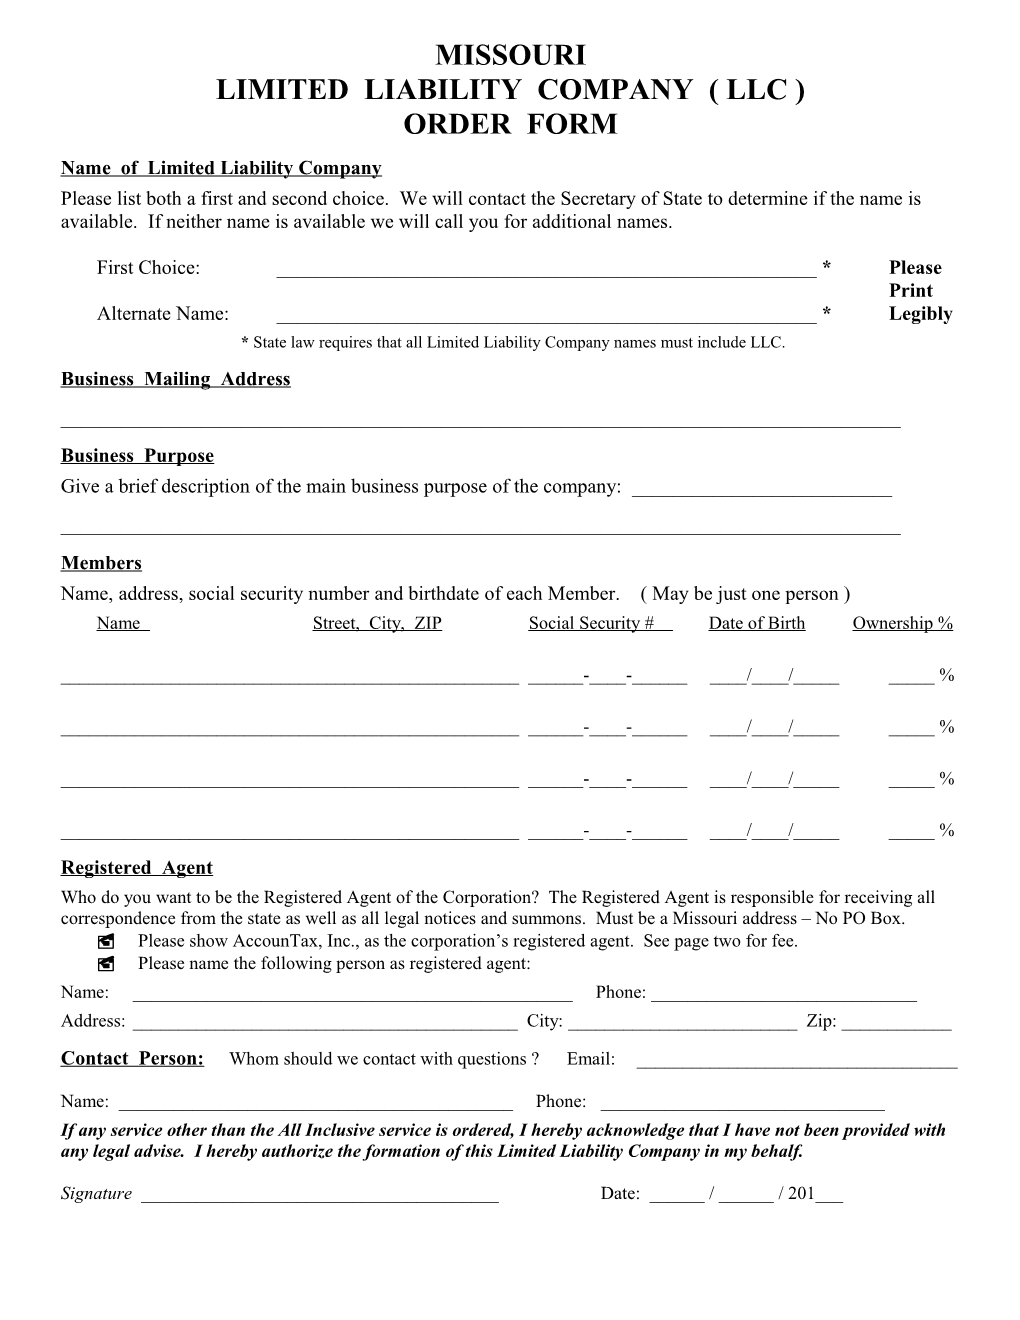 Missouri Incorporation Order Form